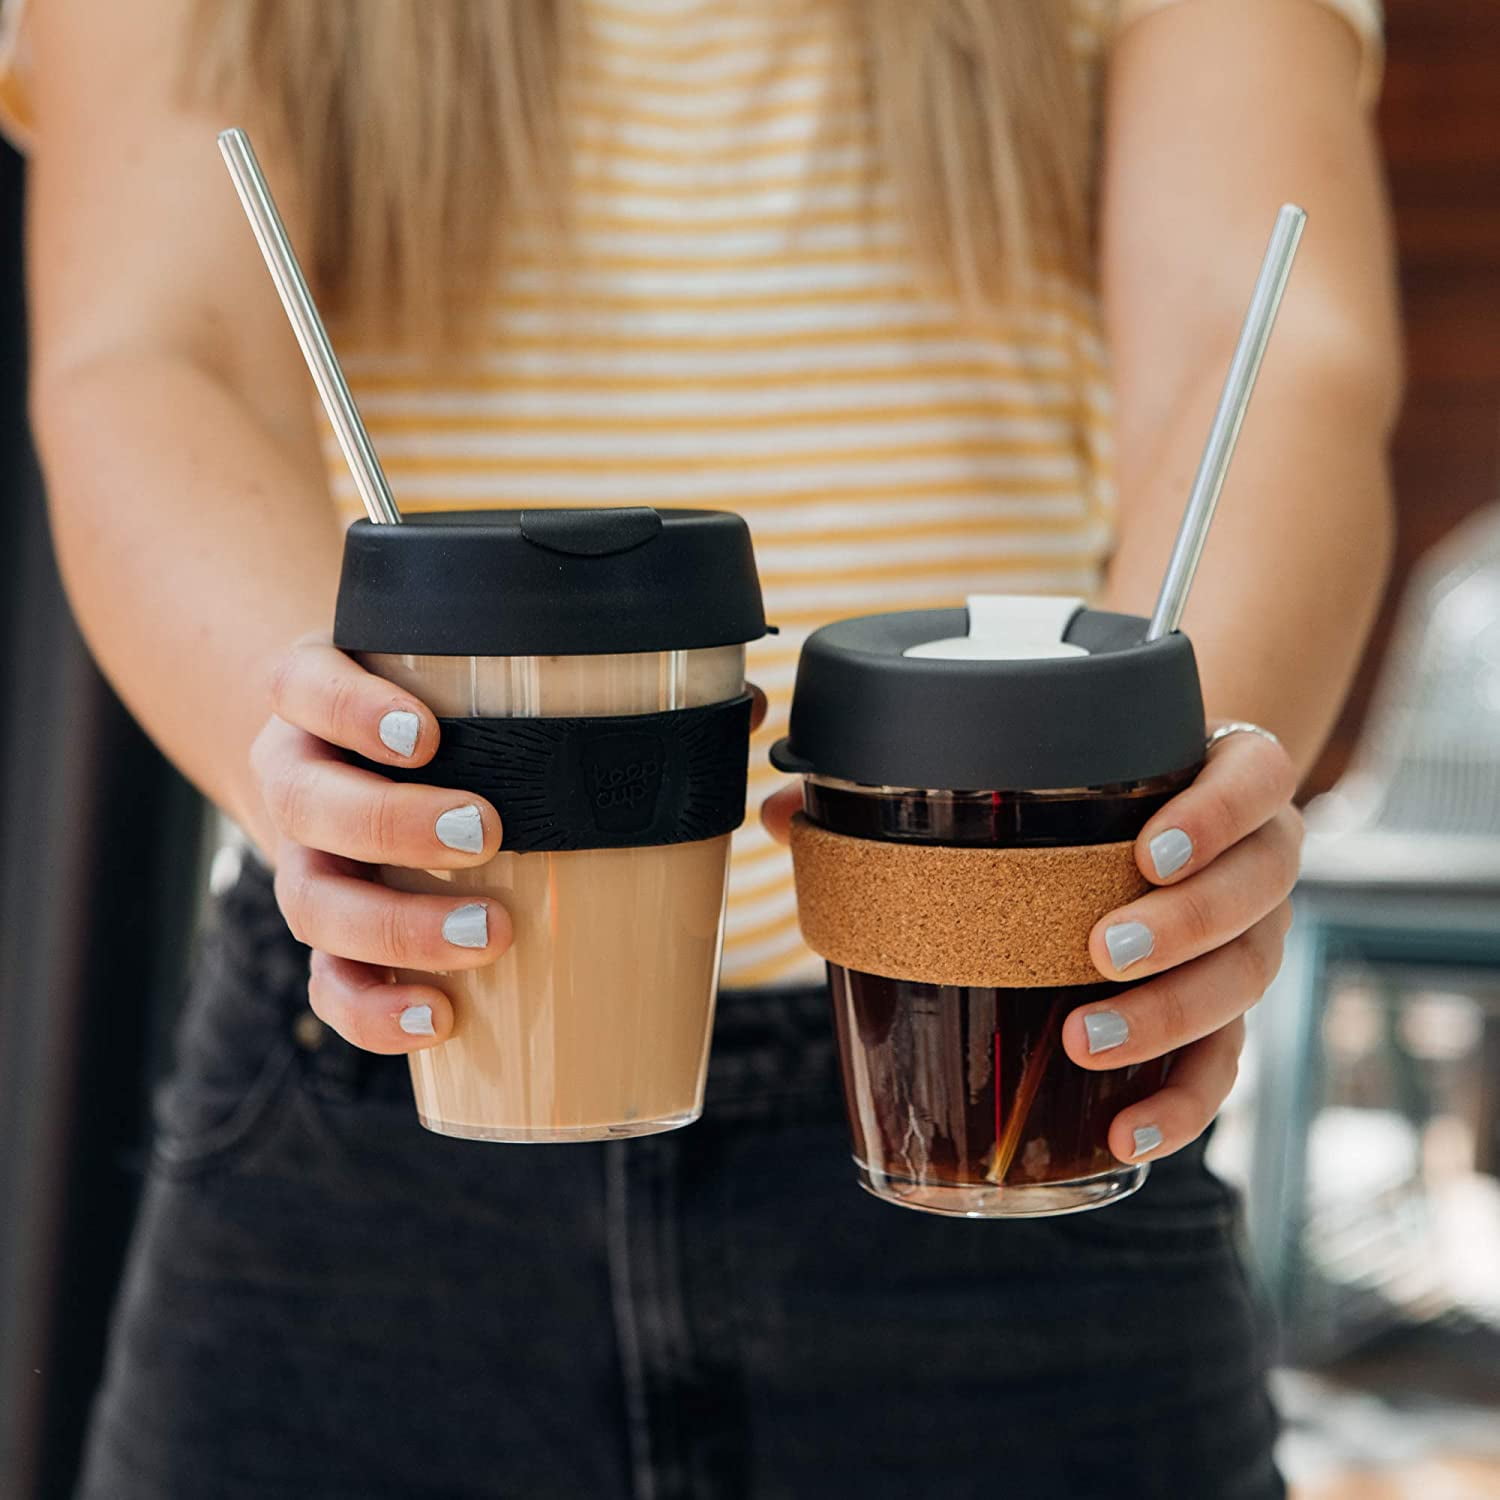 New Keepcup Changemaker Original Reusable Coffee Cup Small size 227ml  Travel Mug